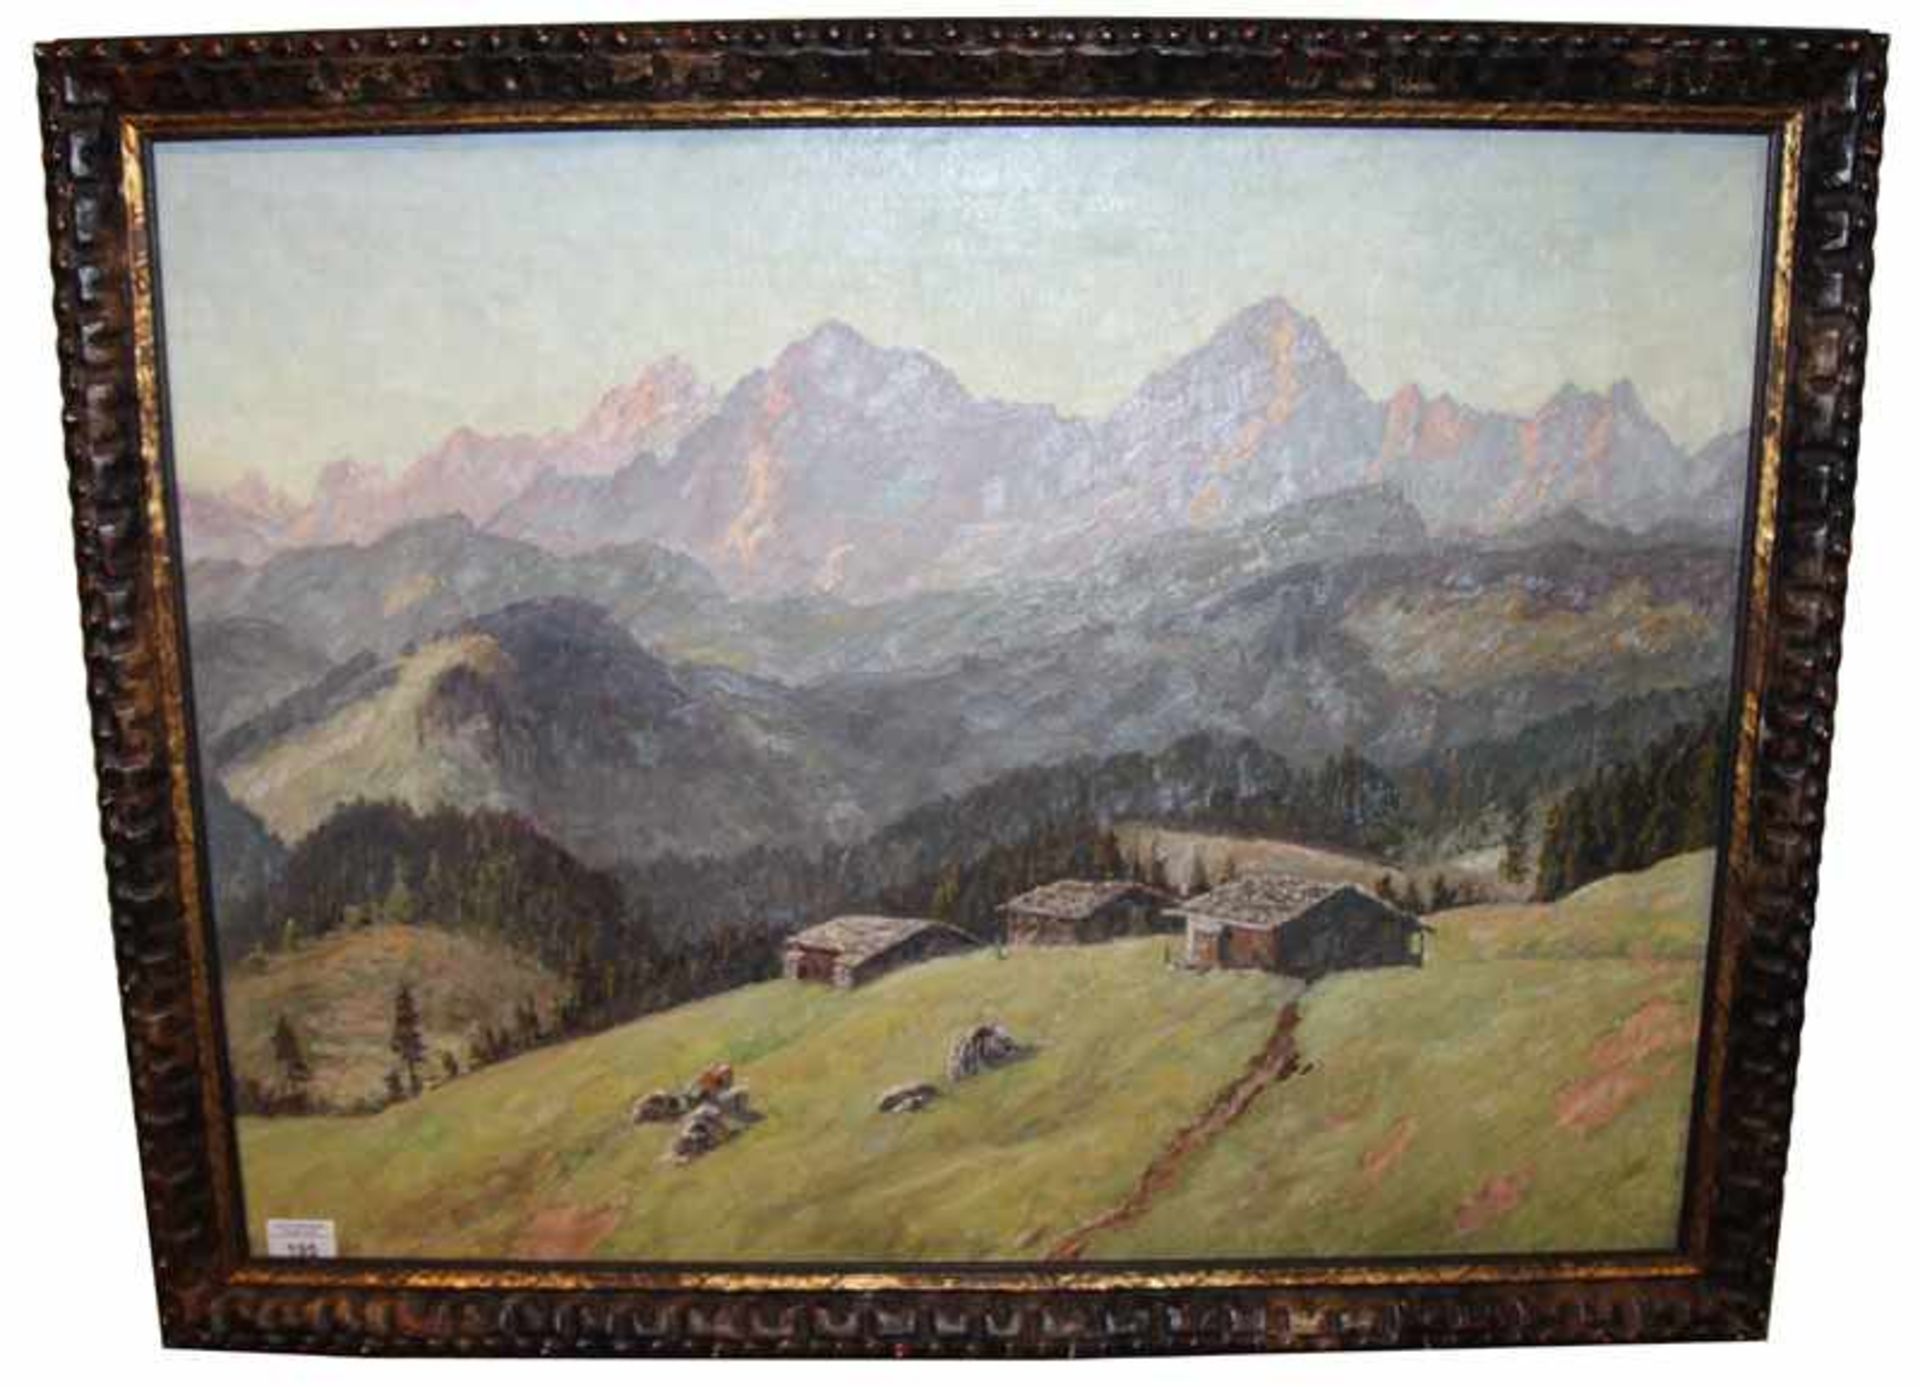 Gemälde ÖL/LW 'Hochgebirgslandschaft', signiert Alex (Alexander) Weise, dt. Landschaftsmaler, * 1883